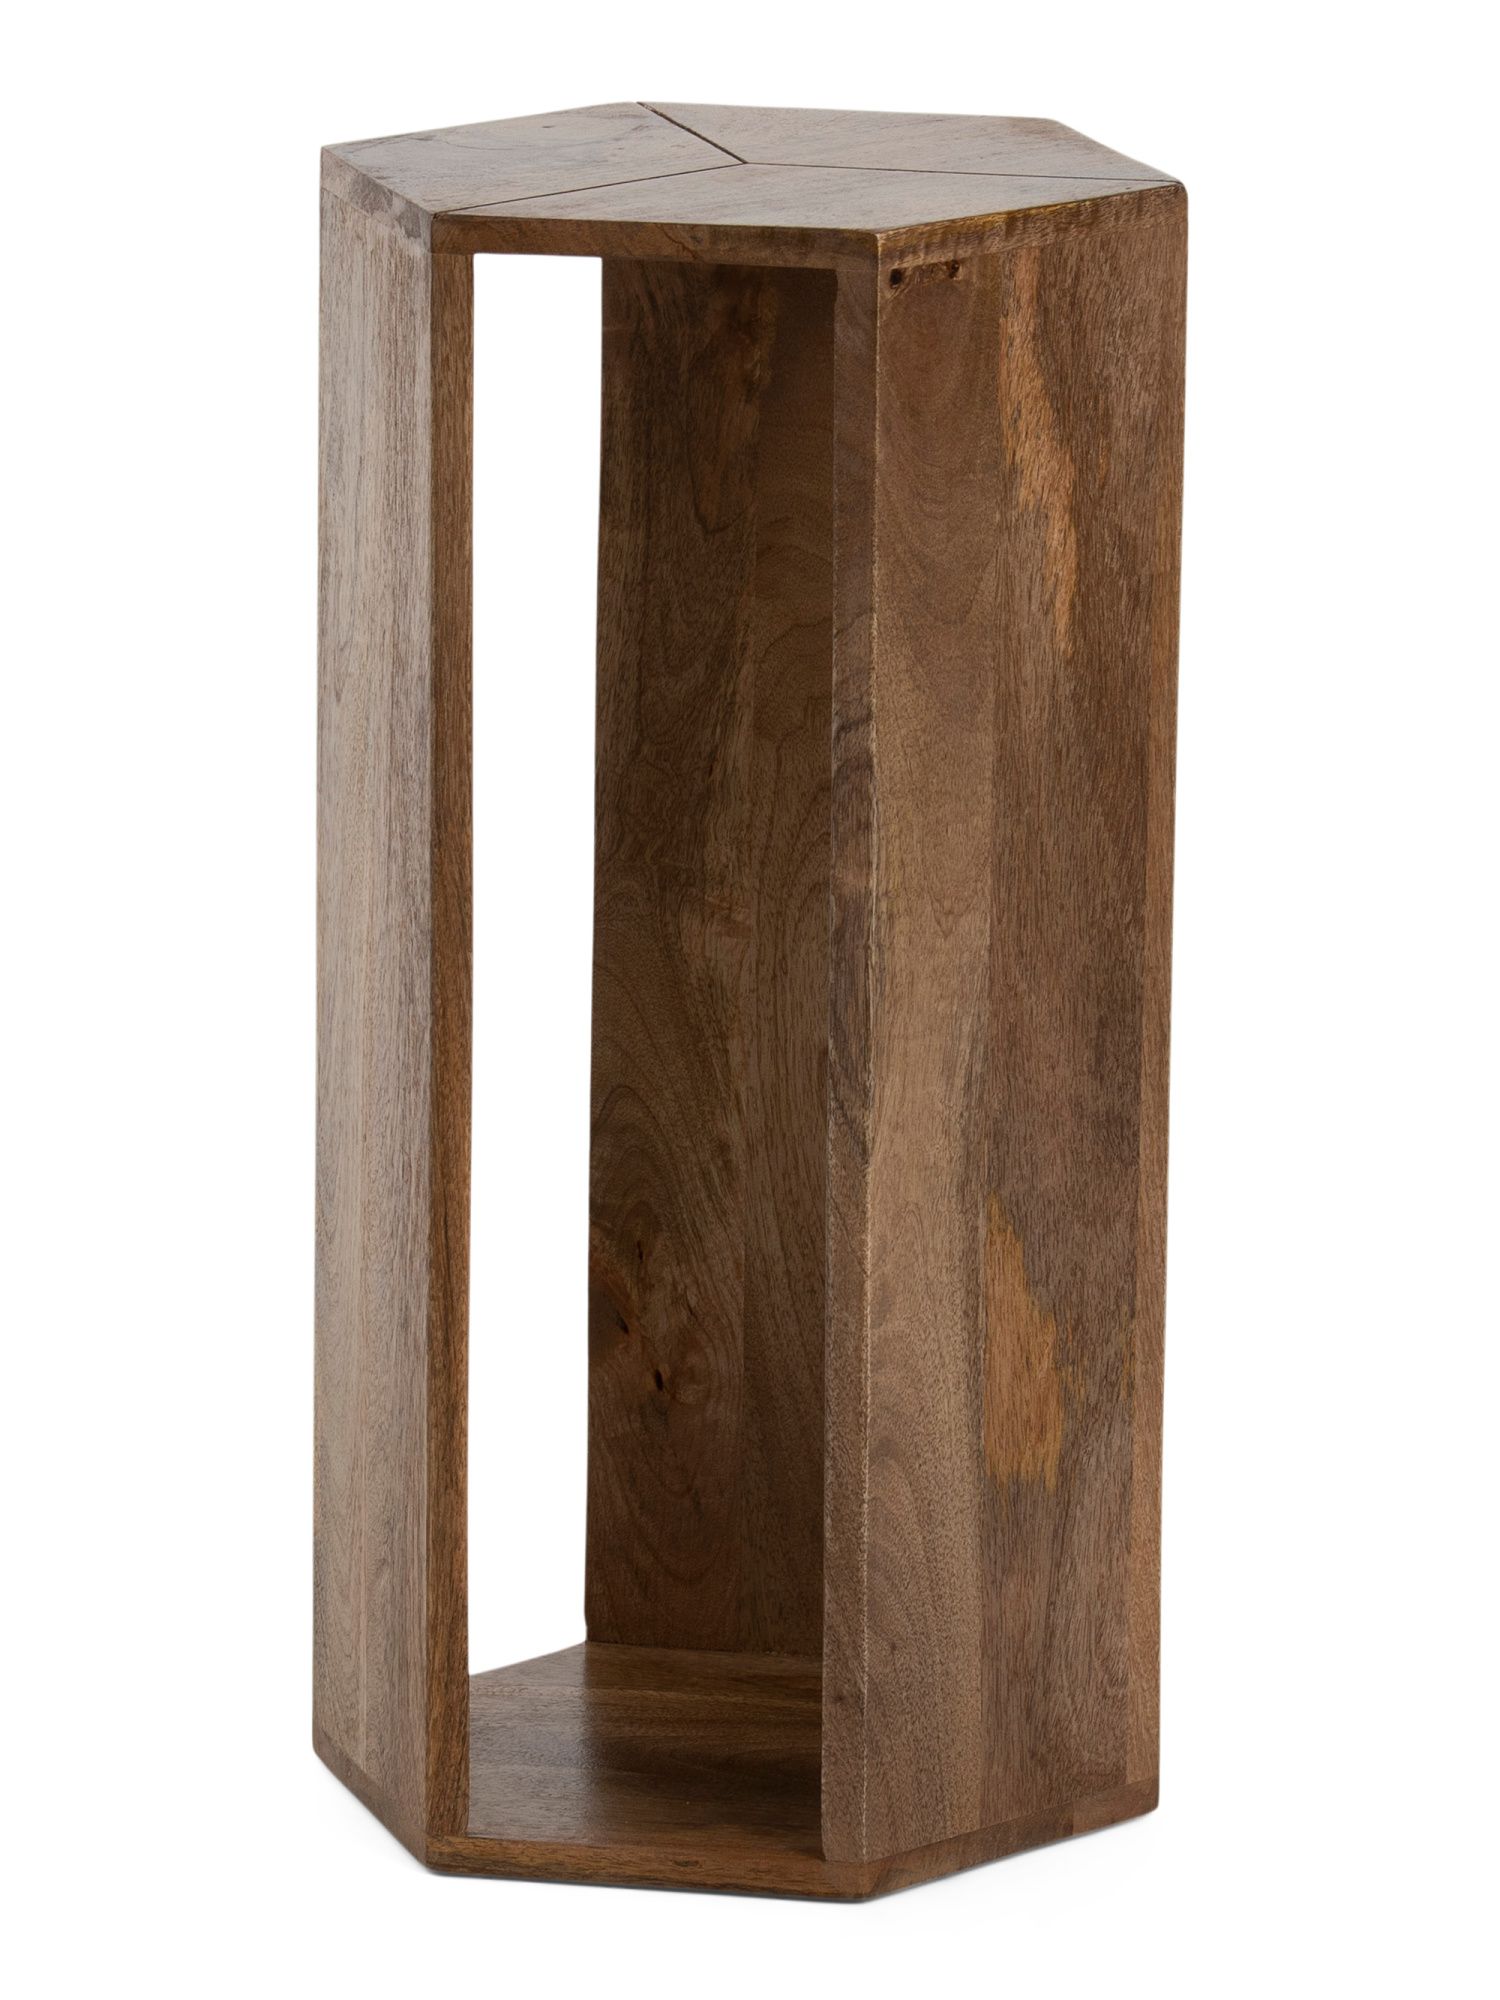 Hexagonal Wooden Side Table | The Global Decor Shop | Marshalls | Marshalls